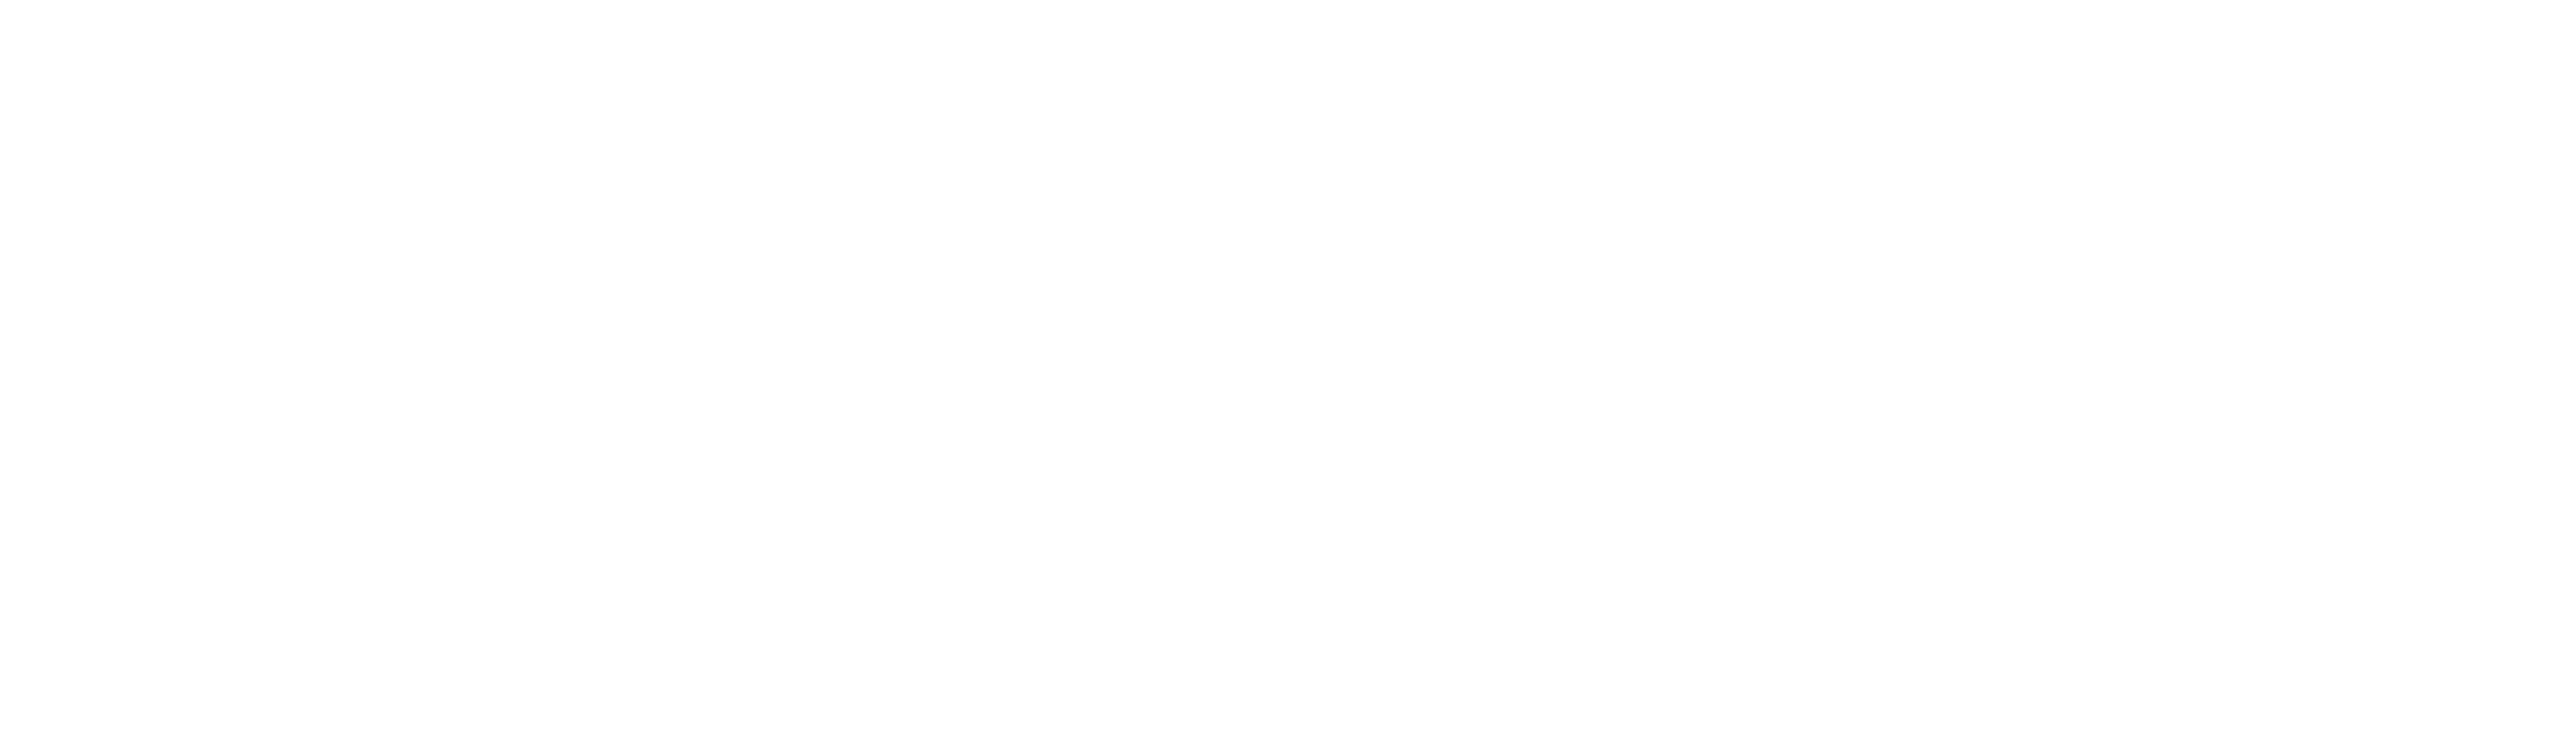 Chislehurst Plumbing & Heating Logo